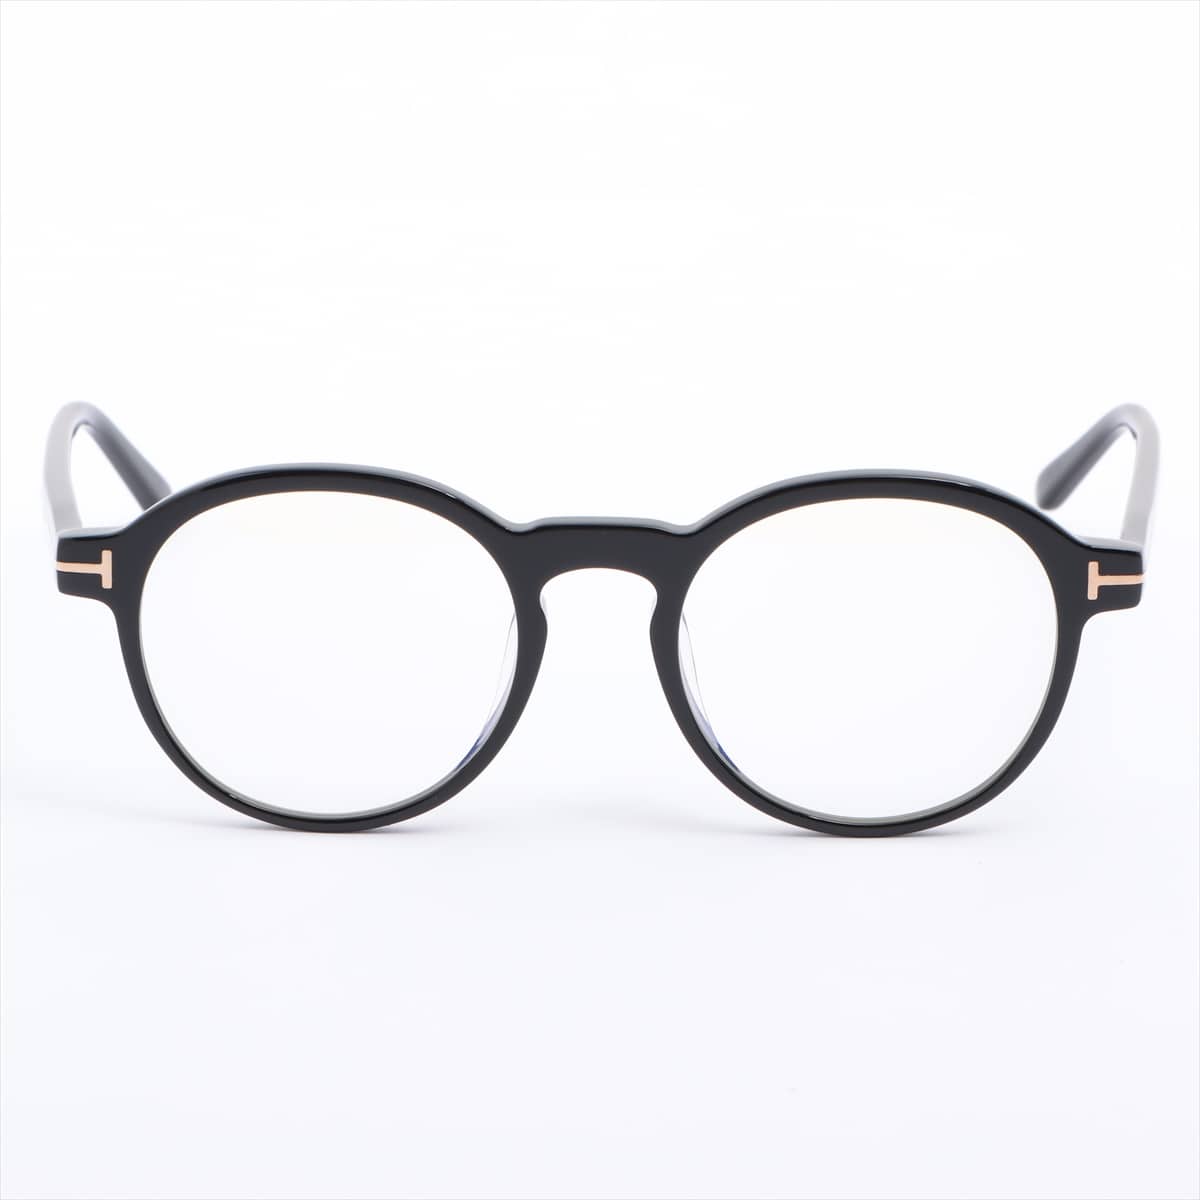 Tom Ford Glasses Plastic